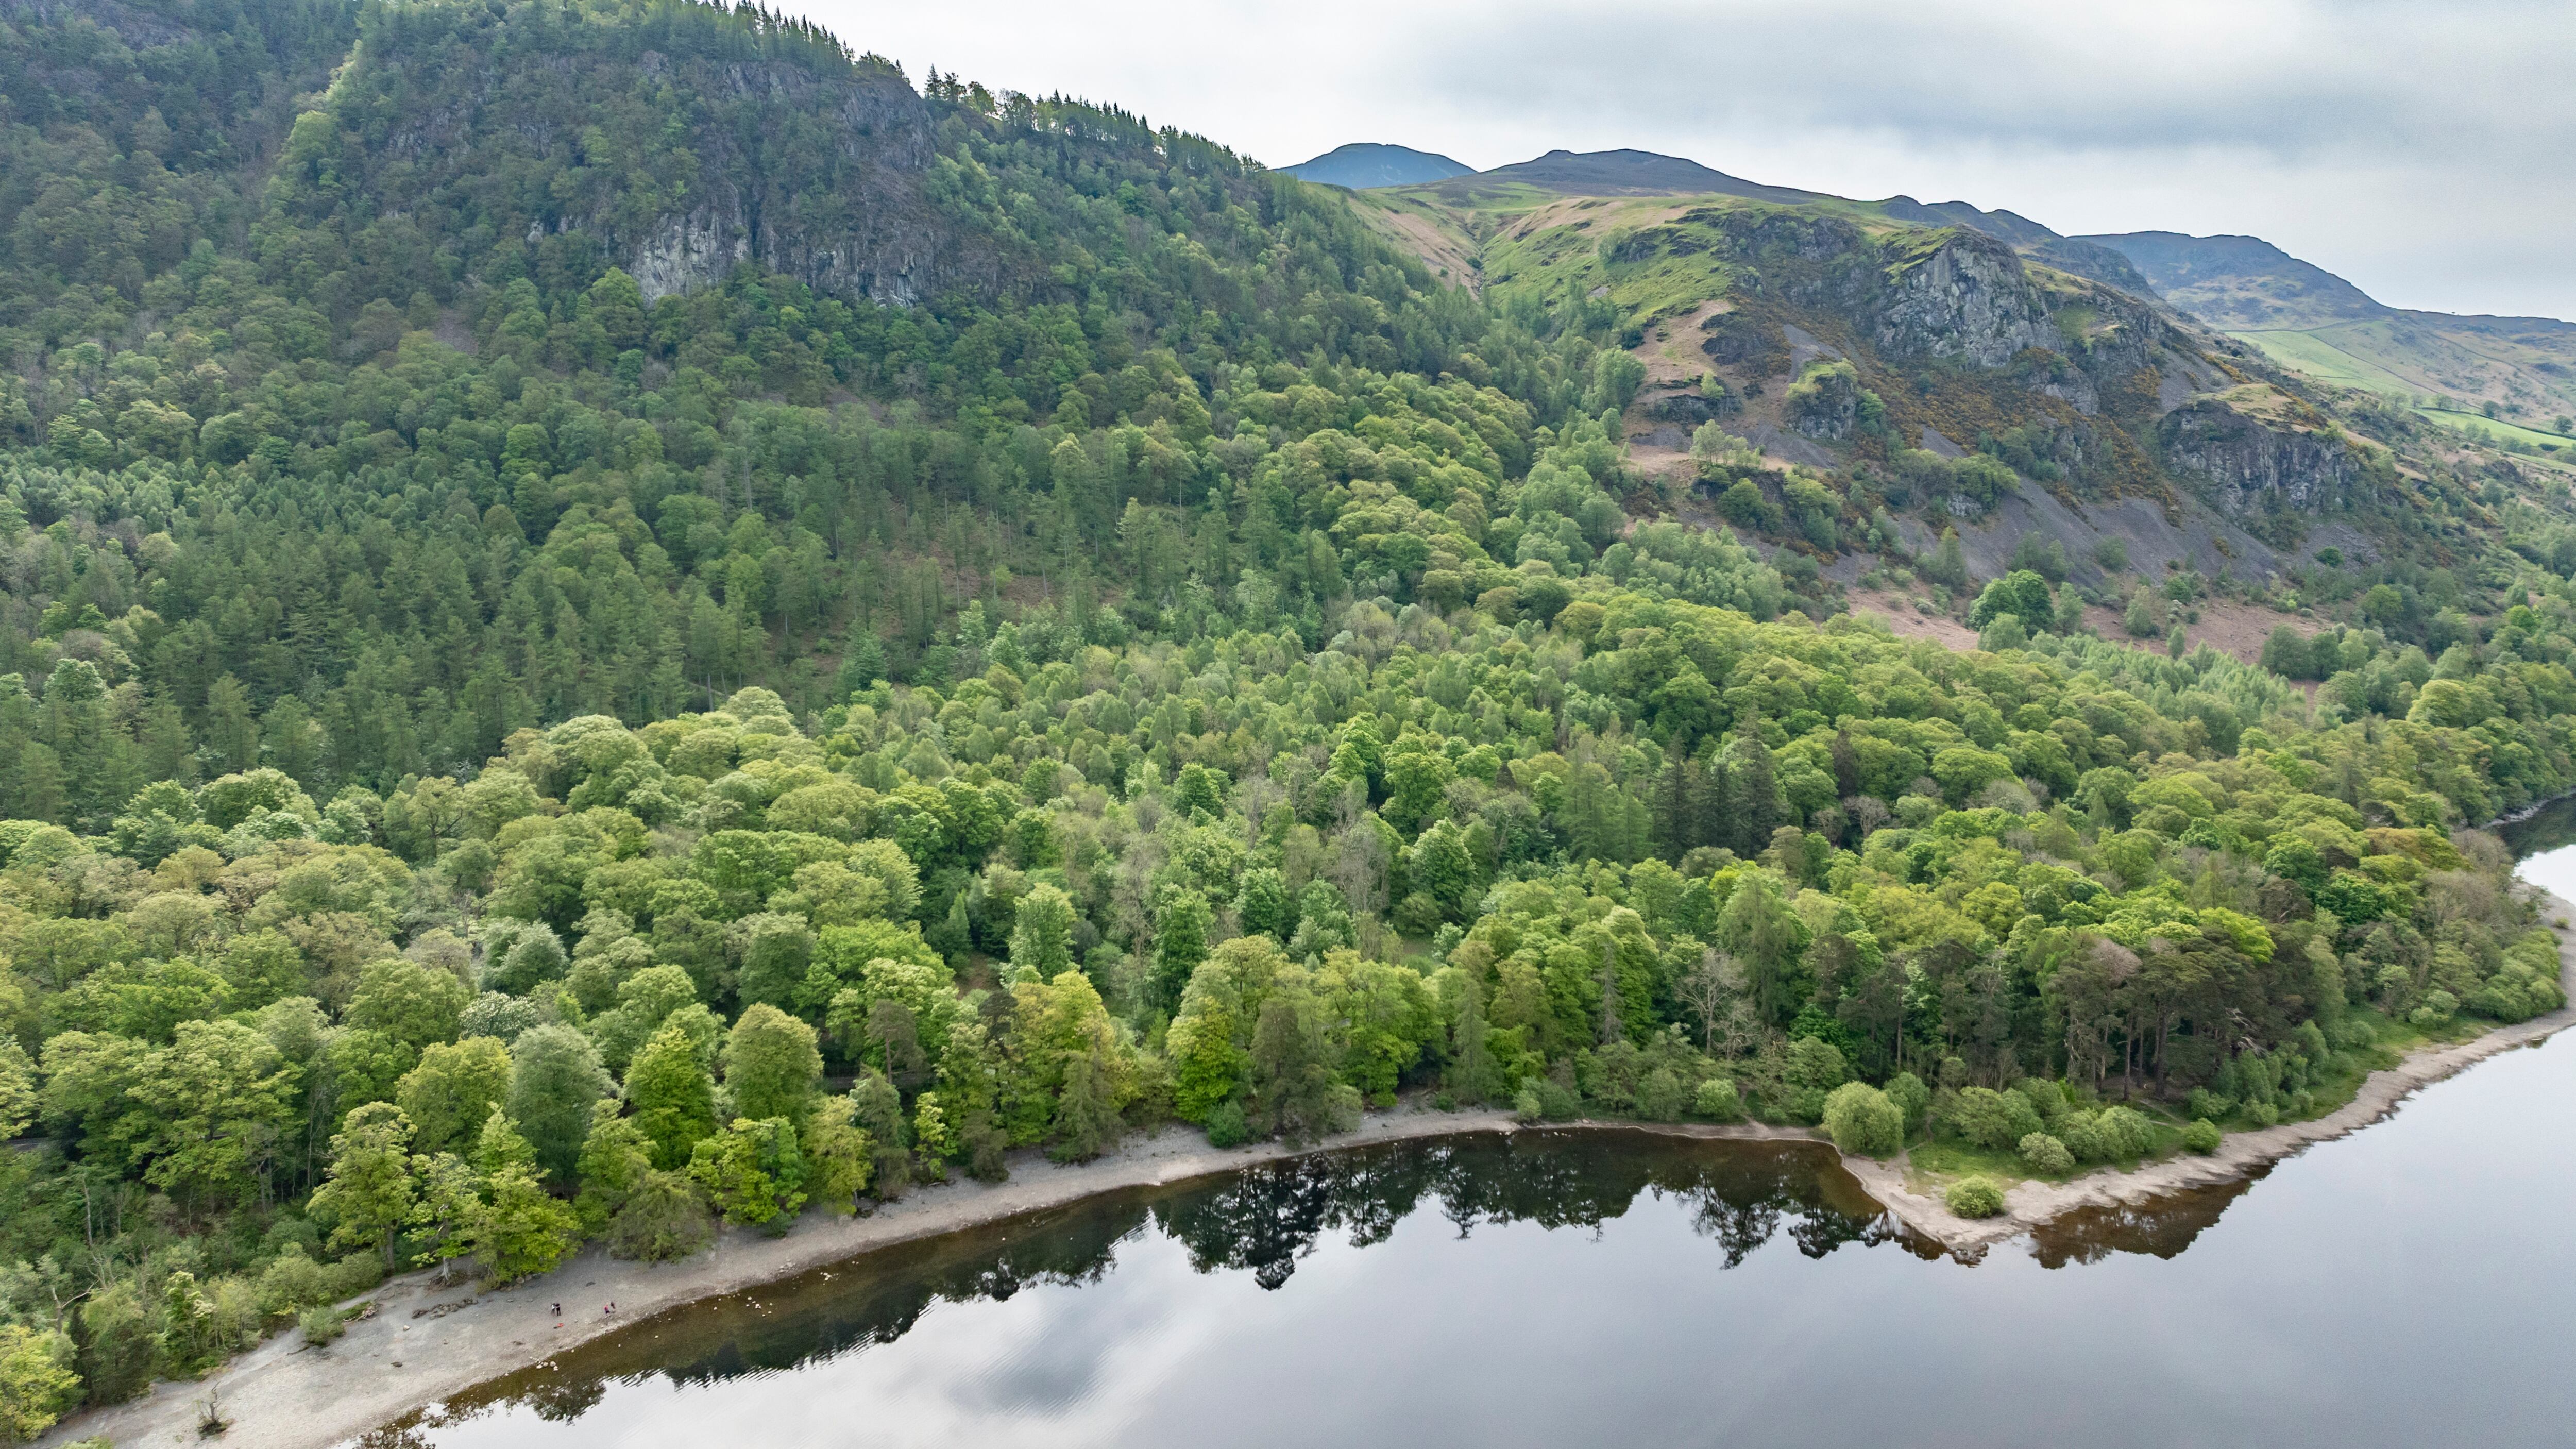 Borrowdale in Cumbria was declared a national nature reserve